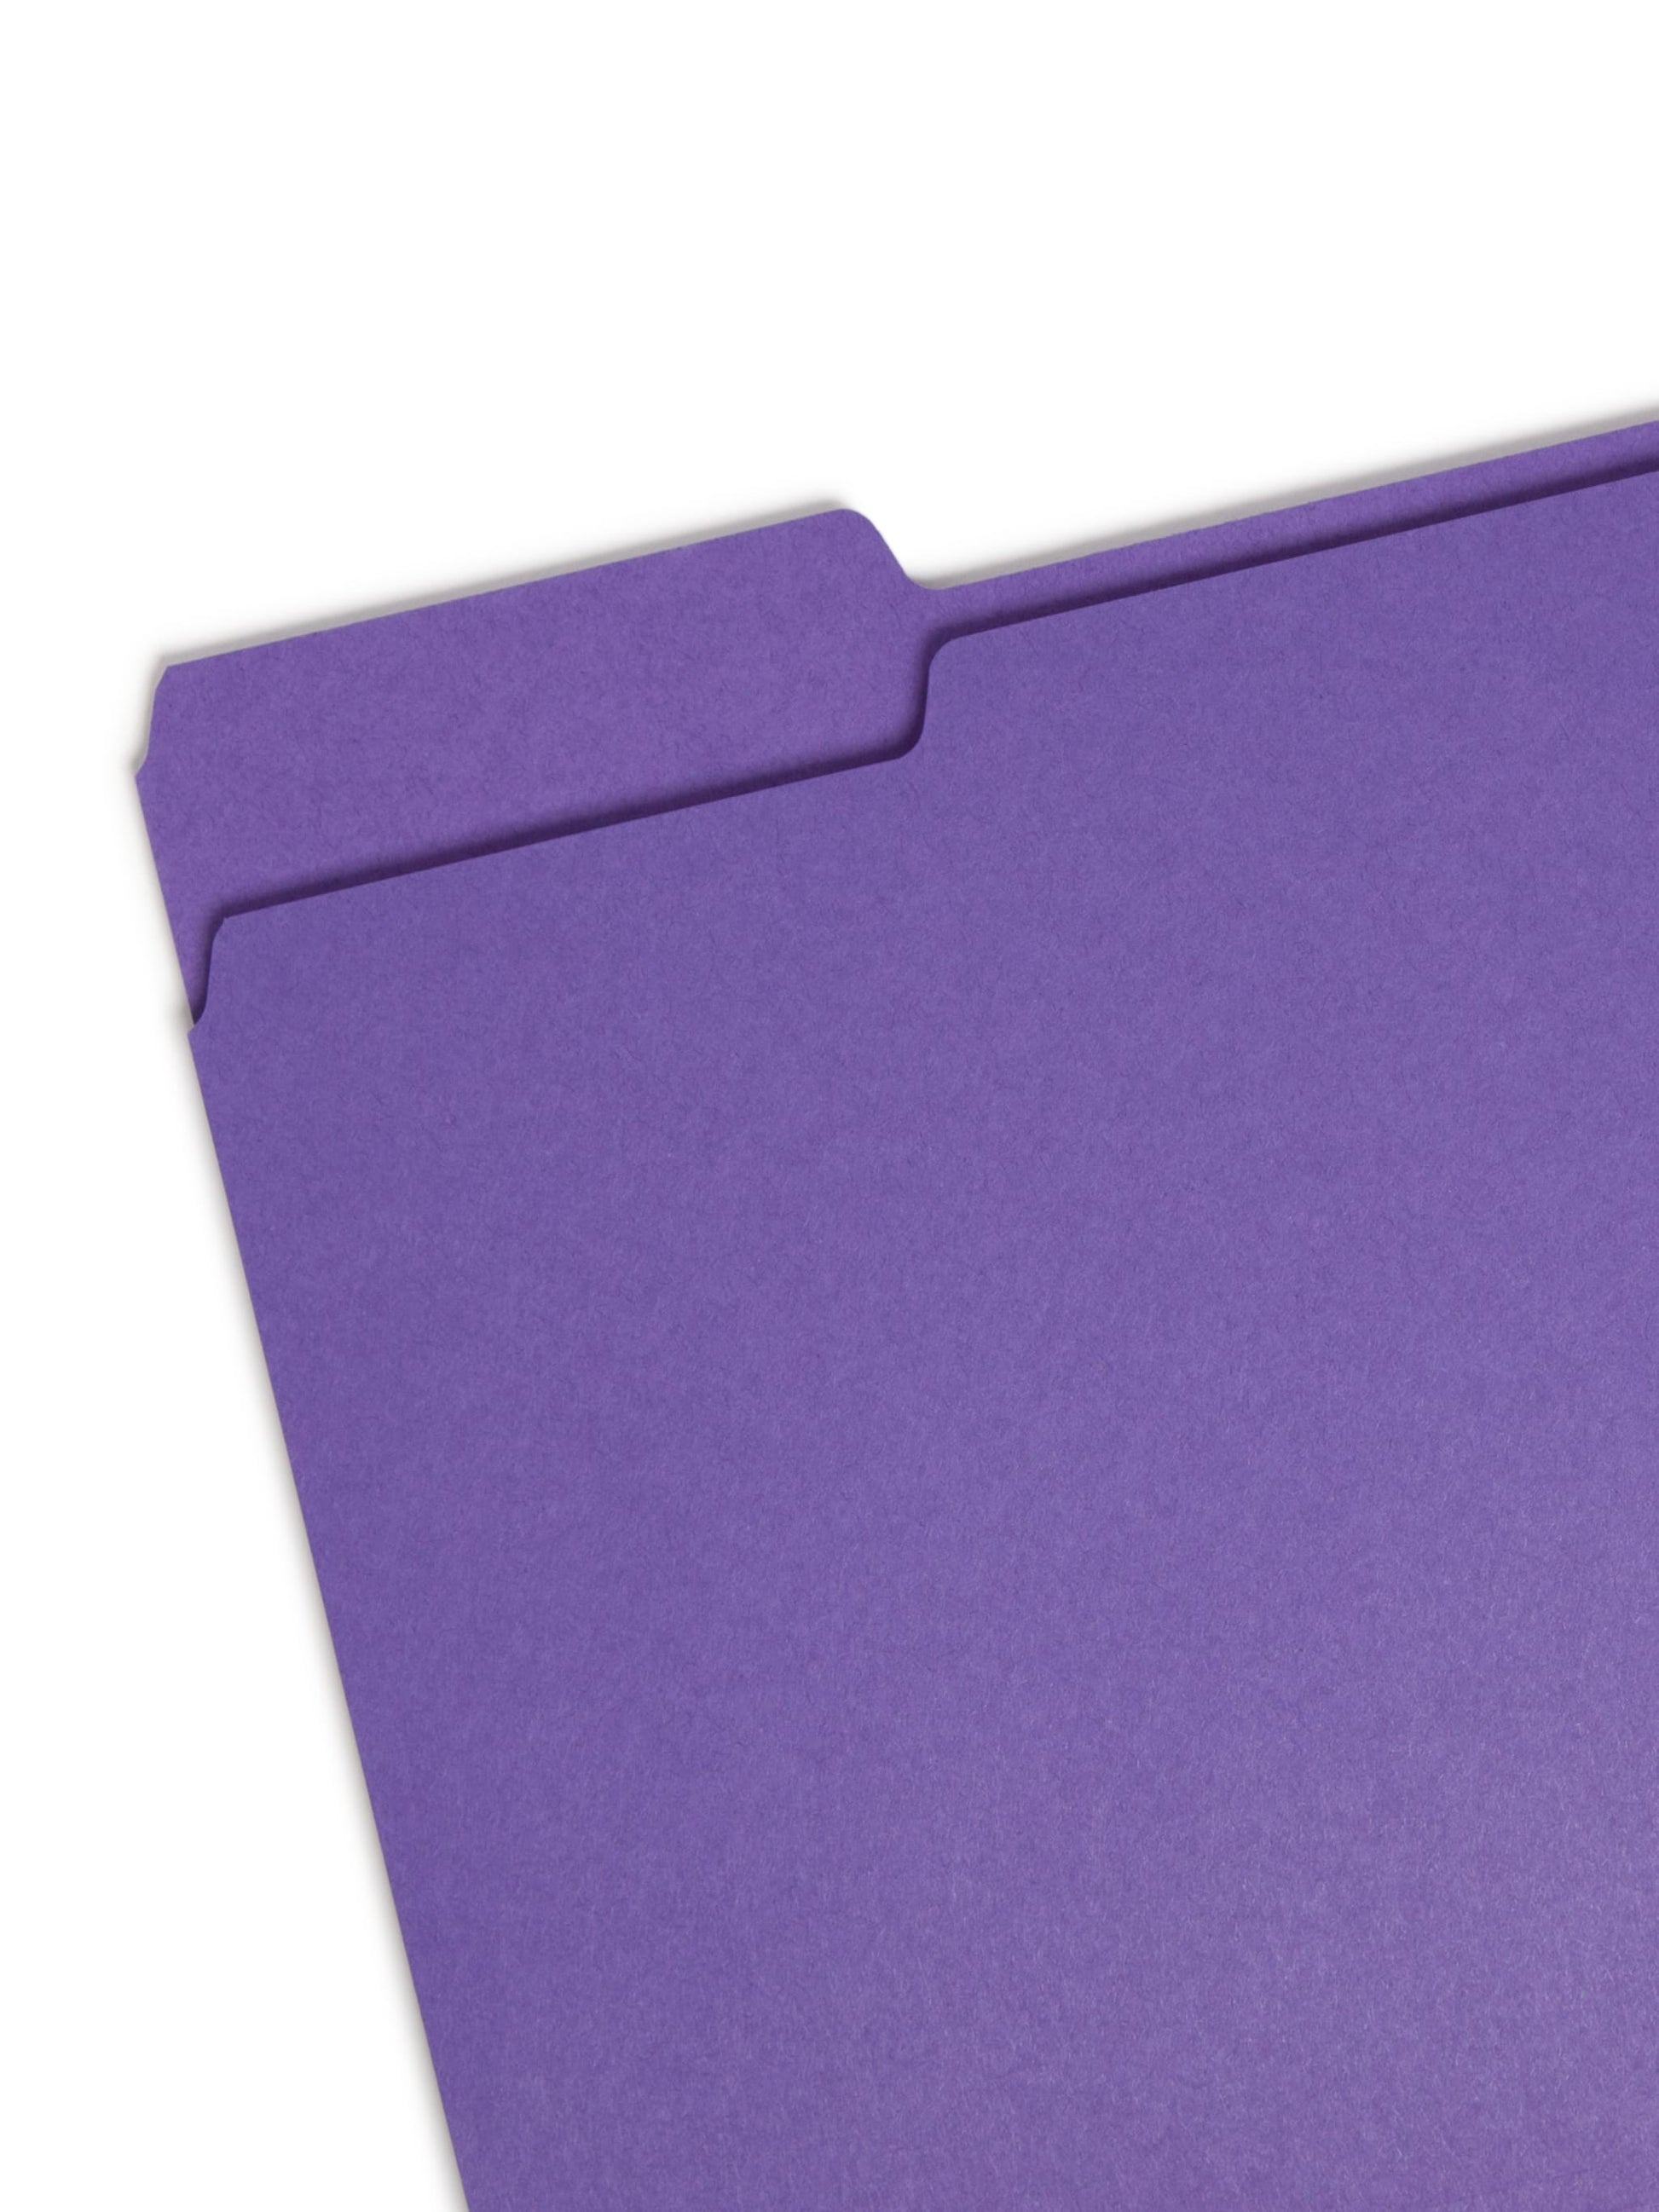 Standard File Folders, 1/3-Cut Tab, Assorted Colors Color, Letter Size, Set of 100, 086486119481